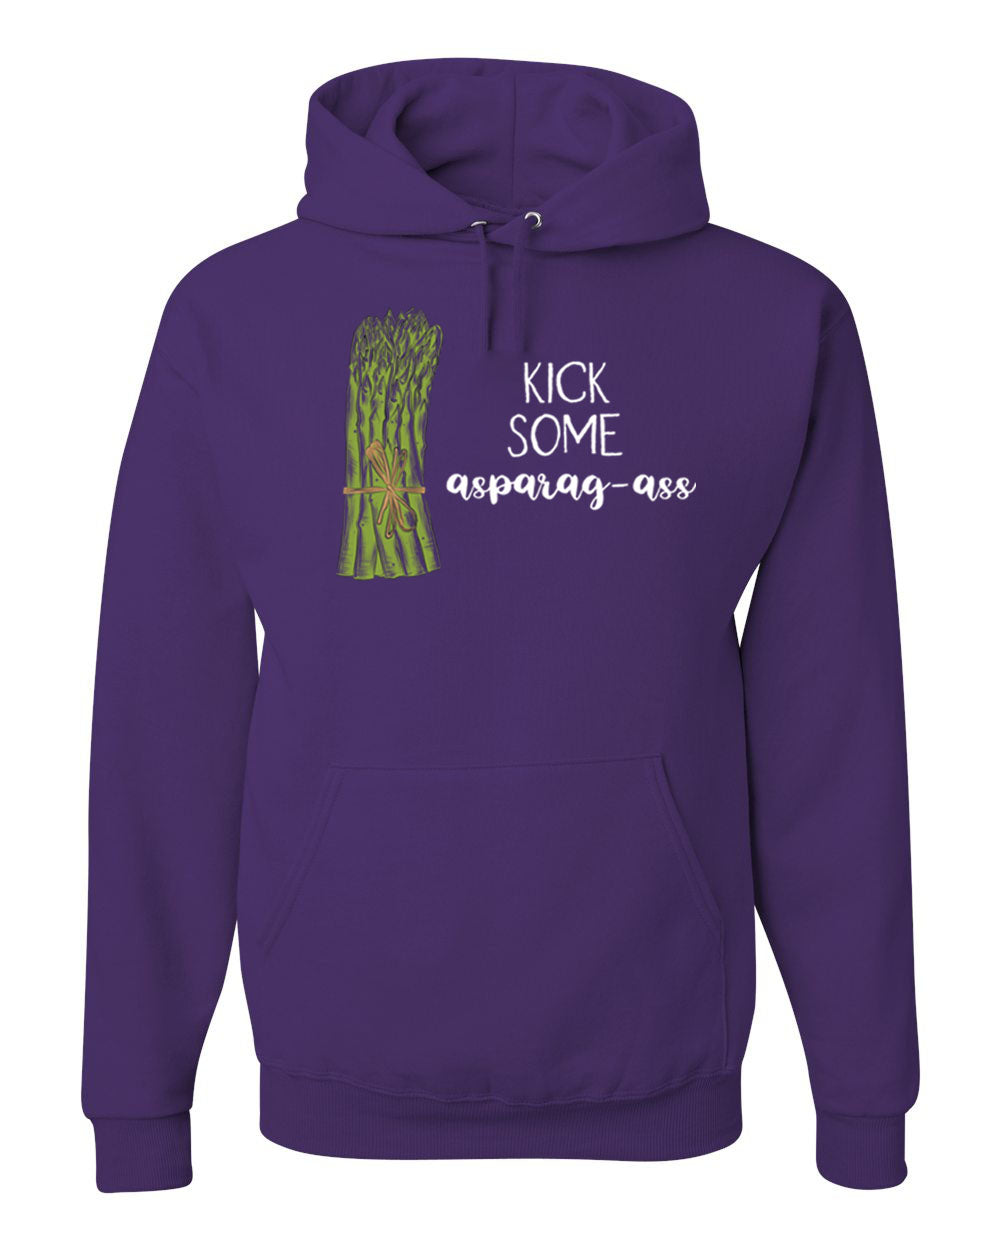 Kick some asparagus Hooded Sweatshirt